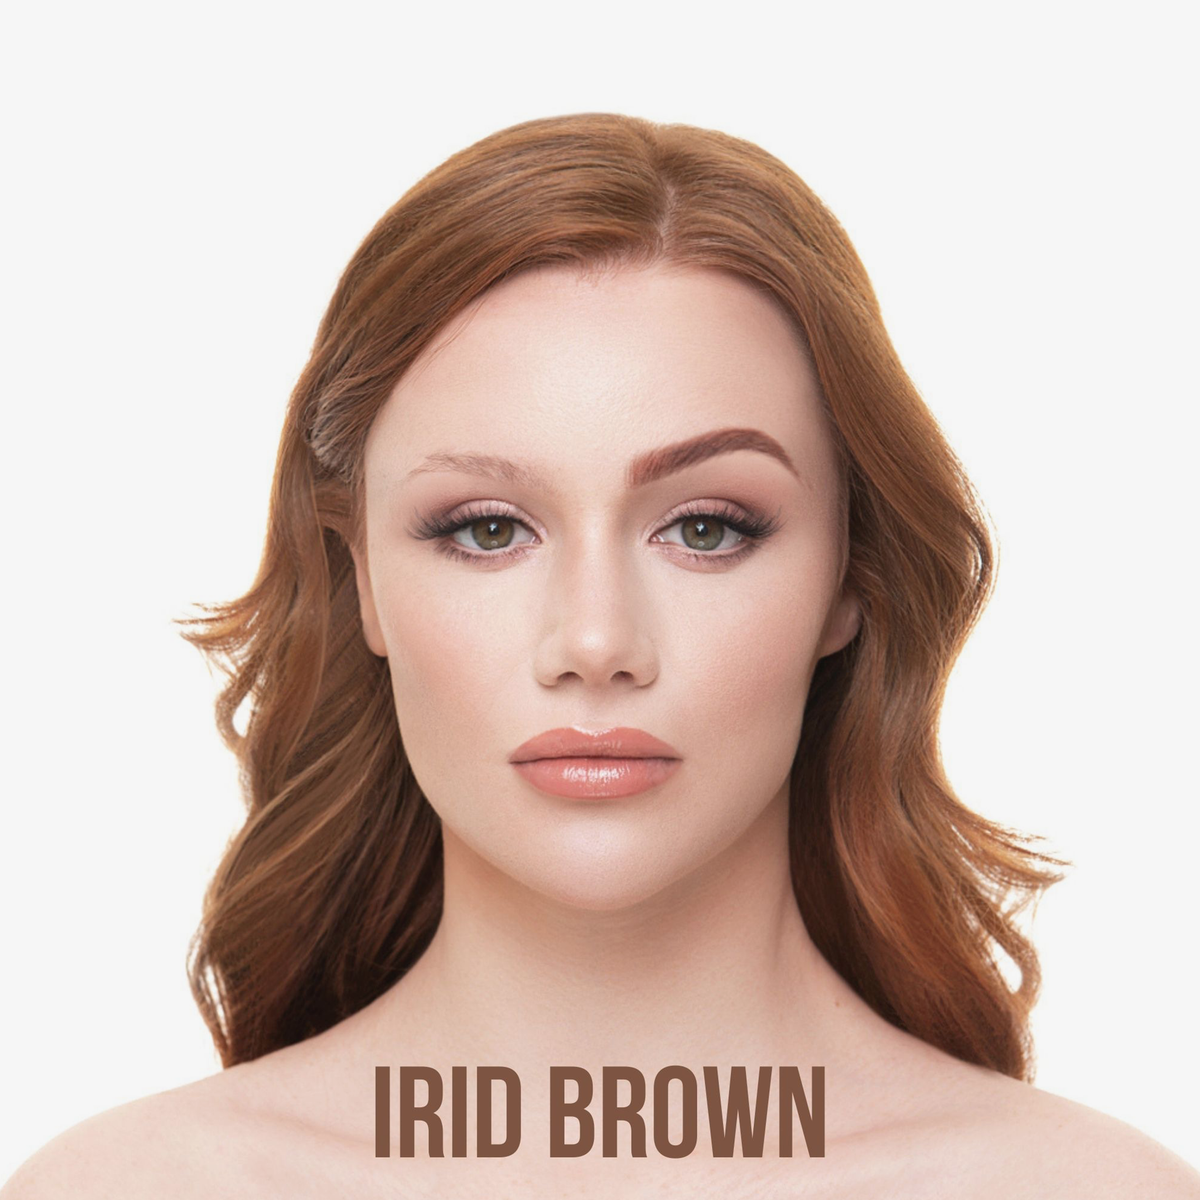 BPerfect Cosmetics | Indestruci'Brow Lock and Load Eye Brow Set Irid Brown